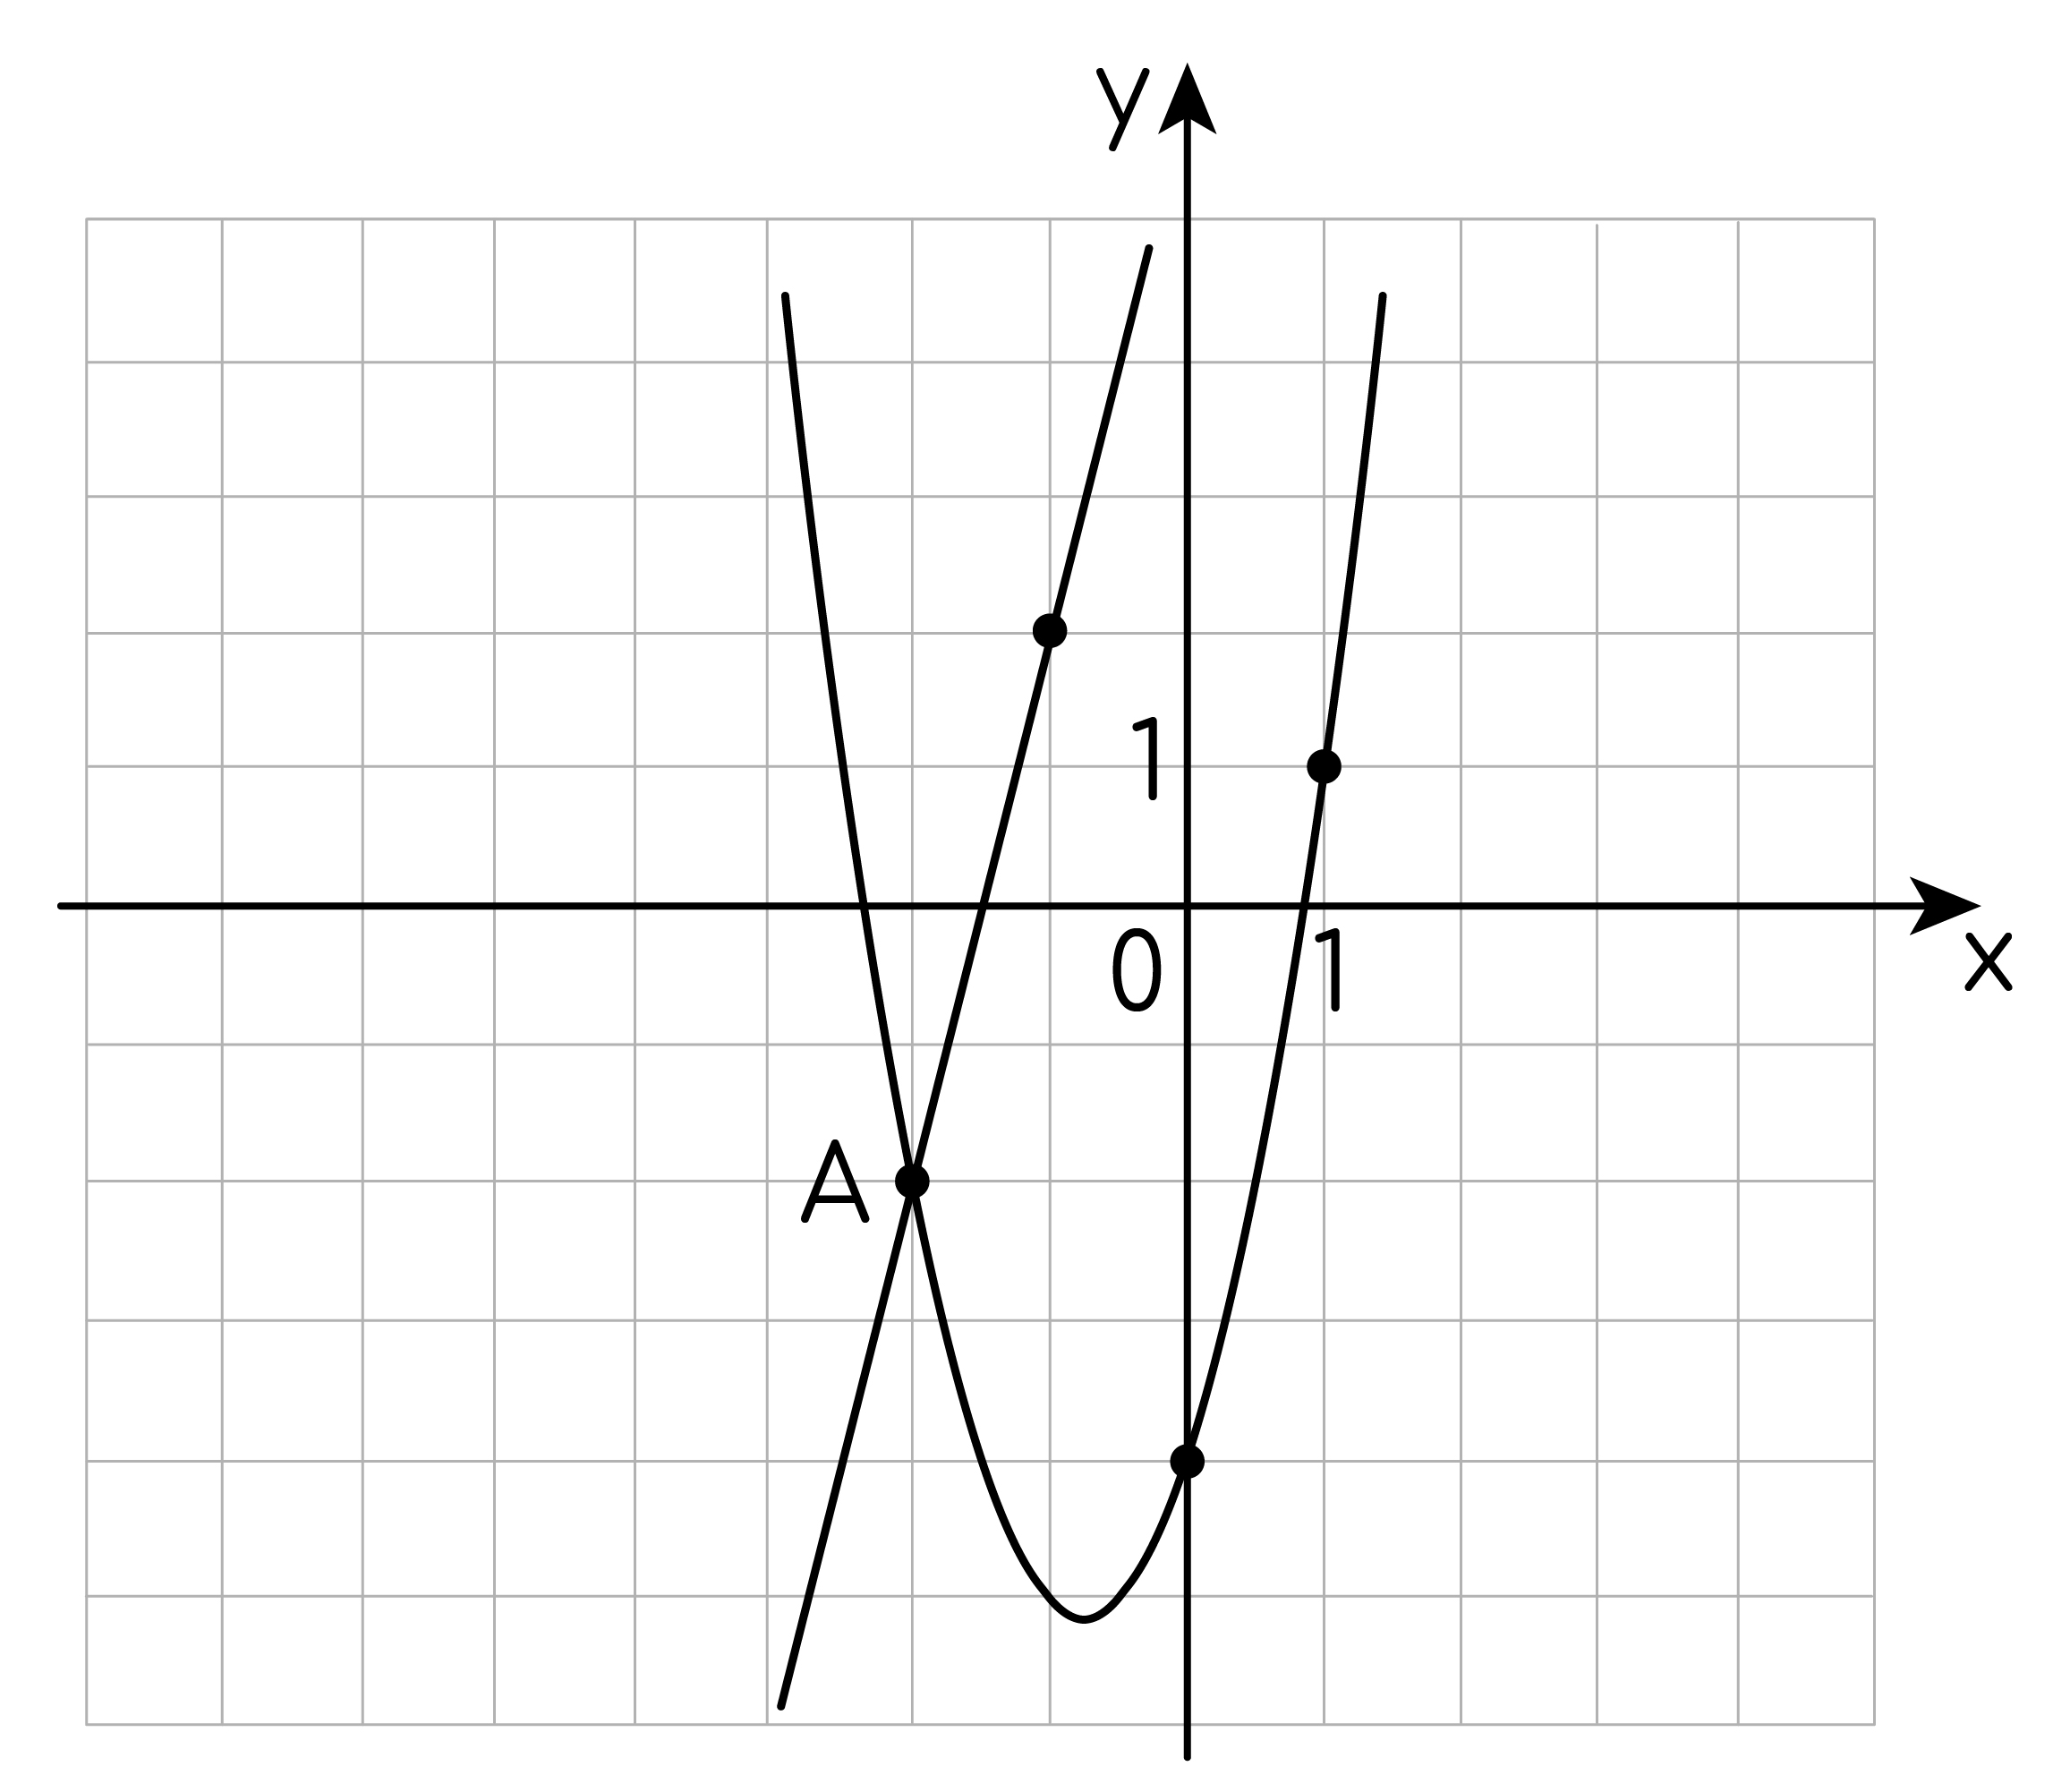 Функция y x2 kx. Графики функций f(x)= ax2. F X ax2+BX+C. График функции y ax2+BX+C. График функции ax2+BX+C.